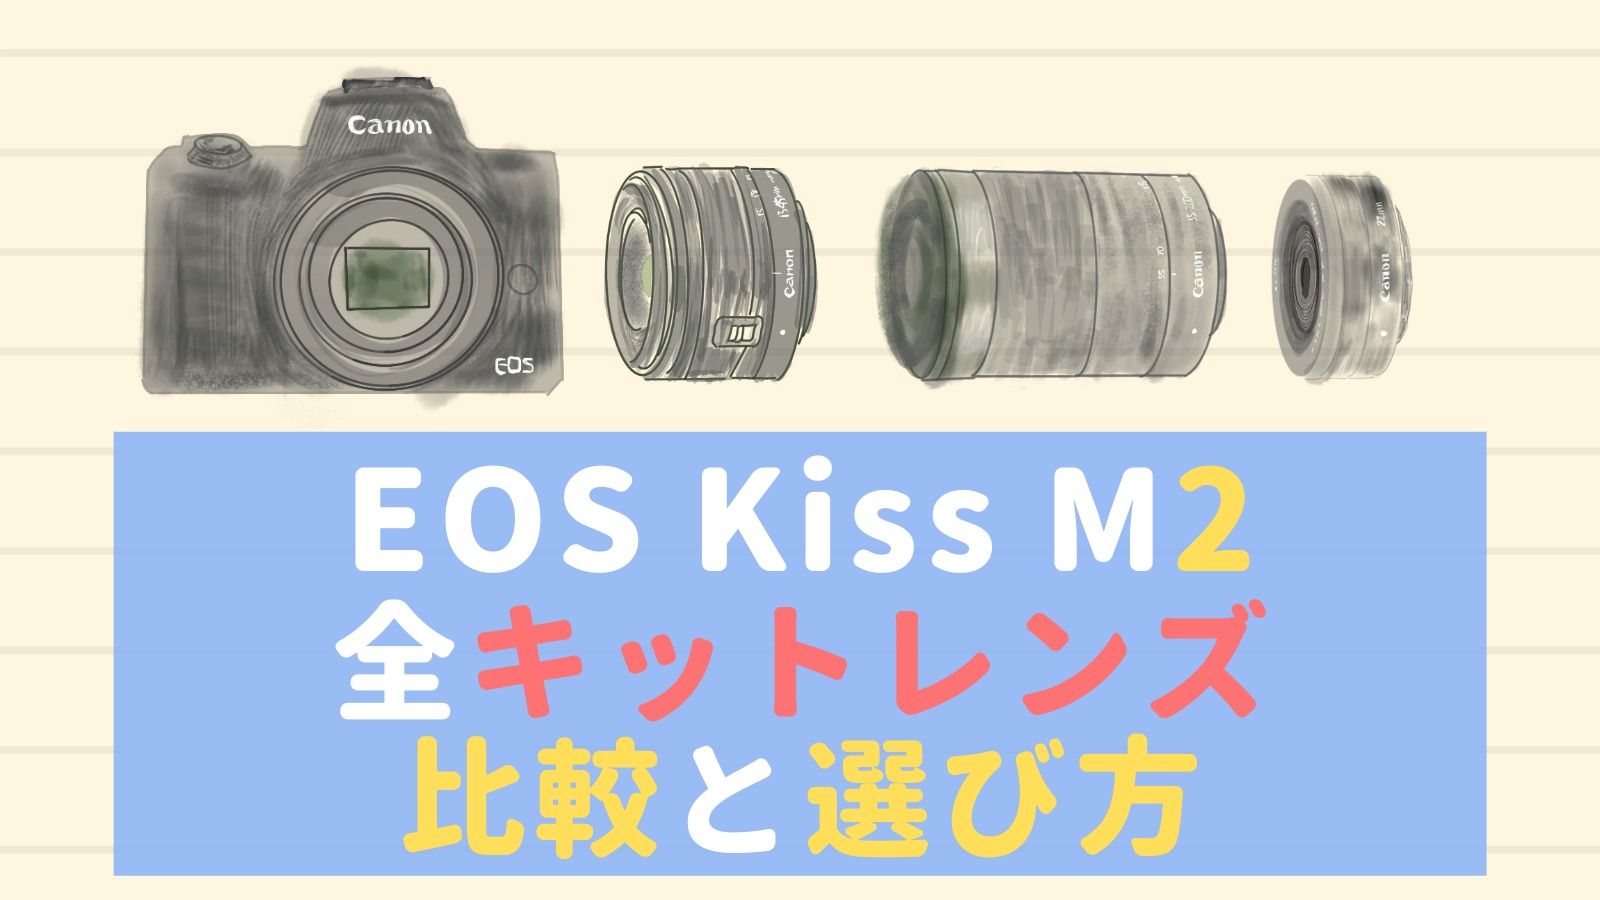 Canon EOS Kiss M2 ダブルレンズキット